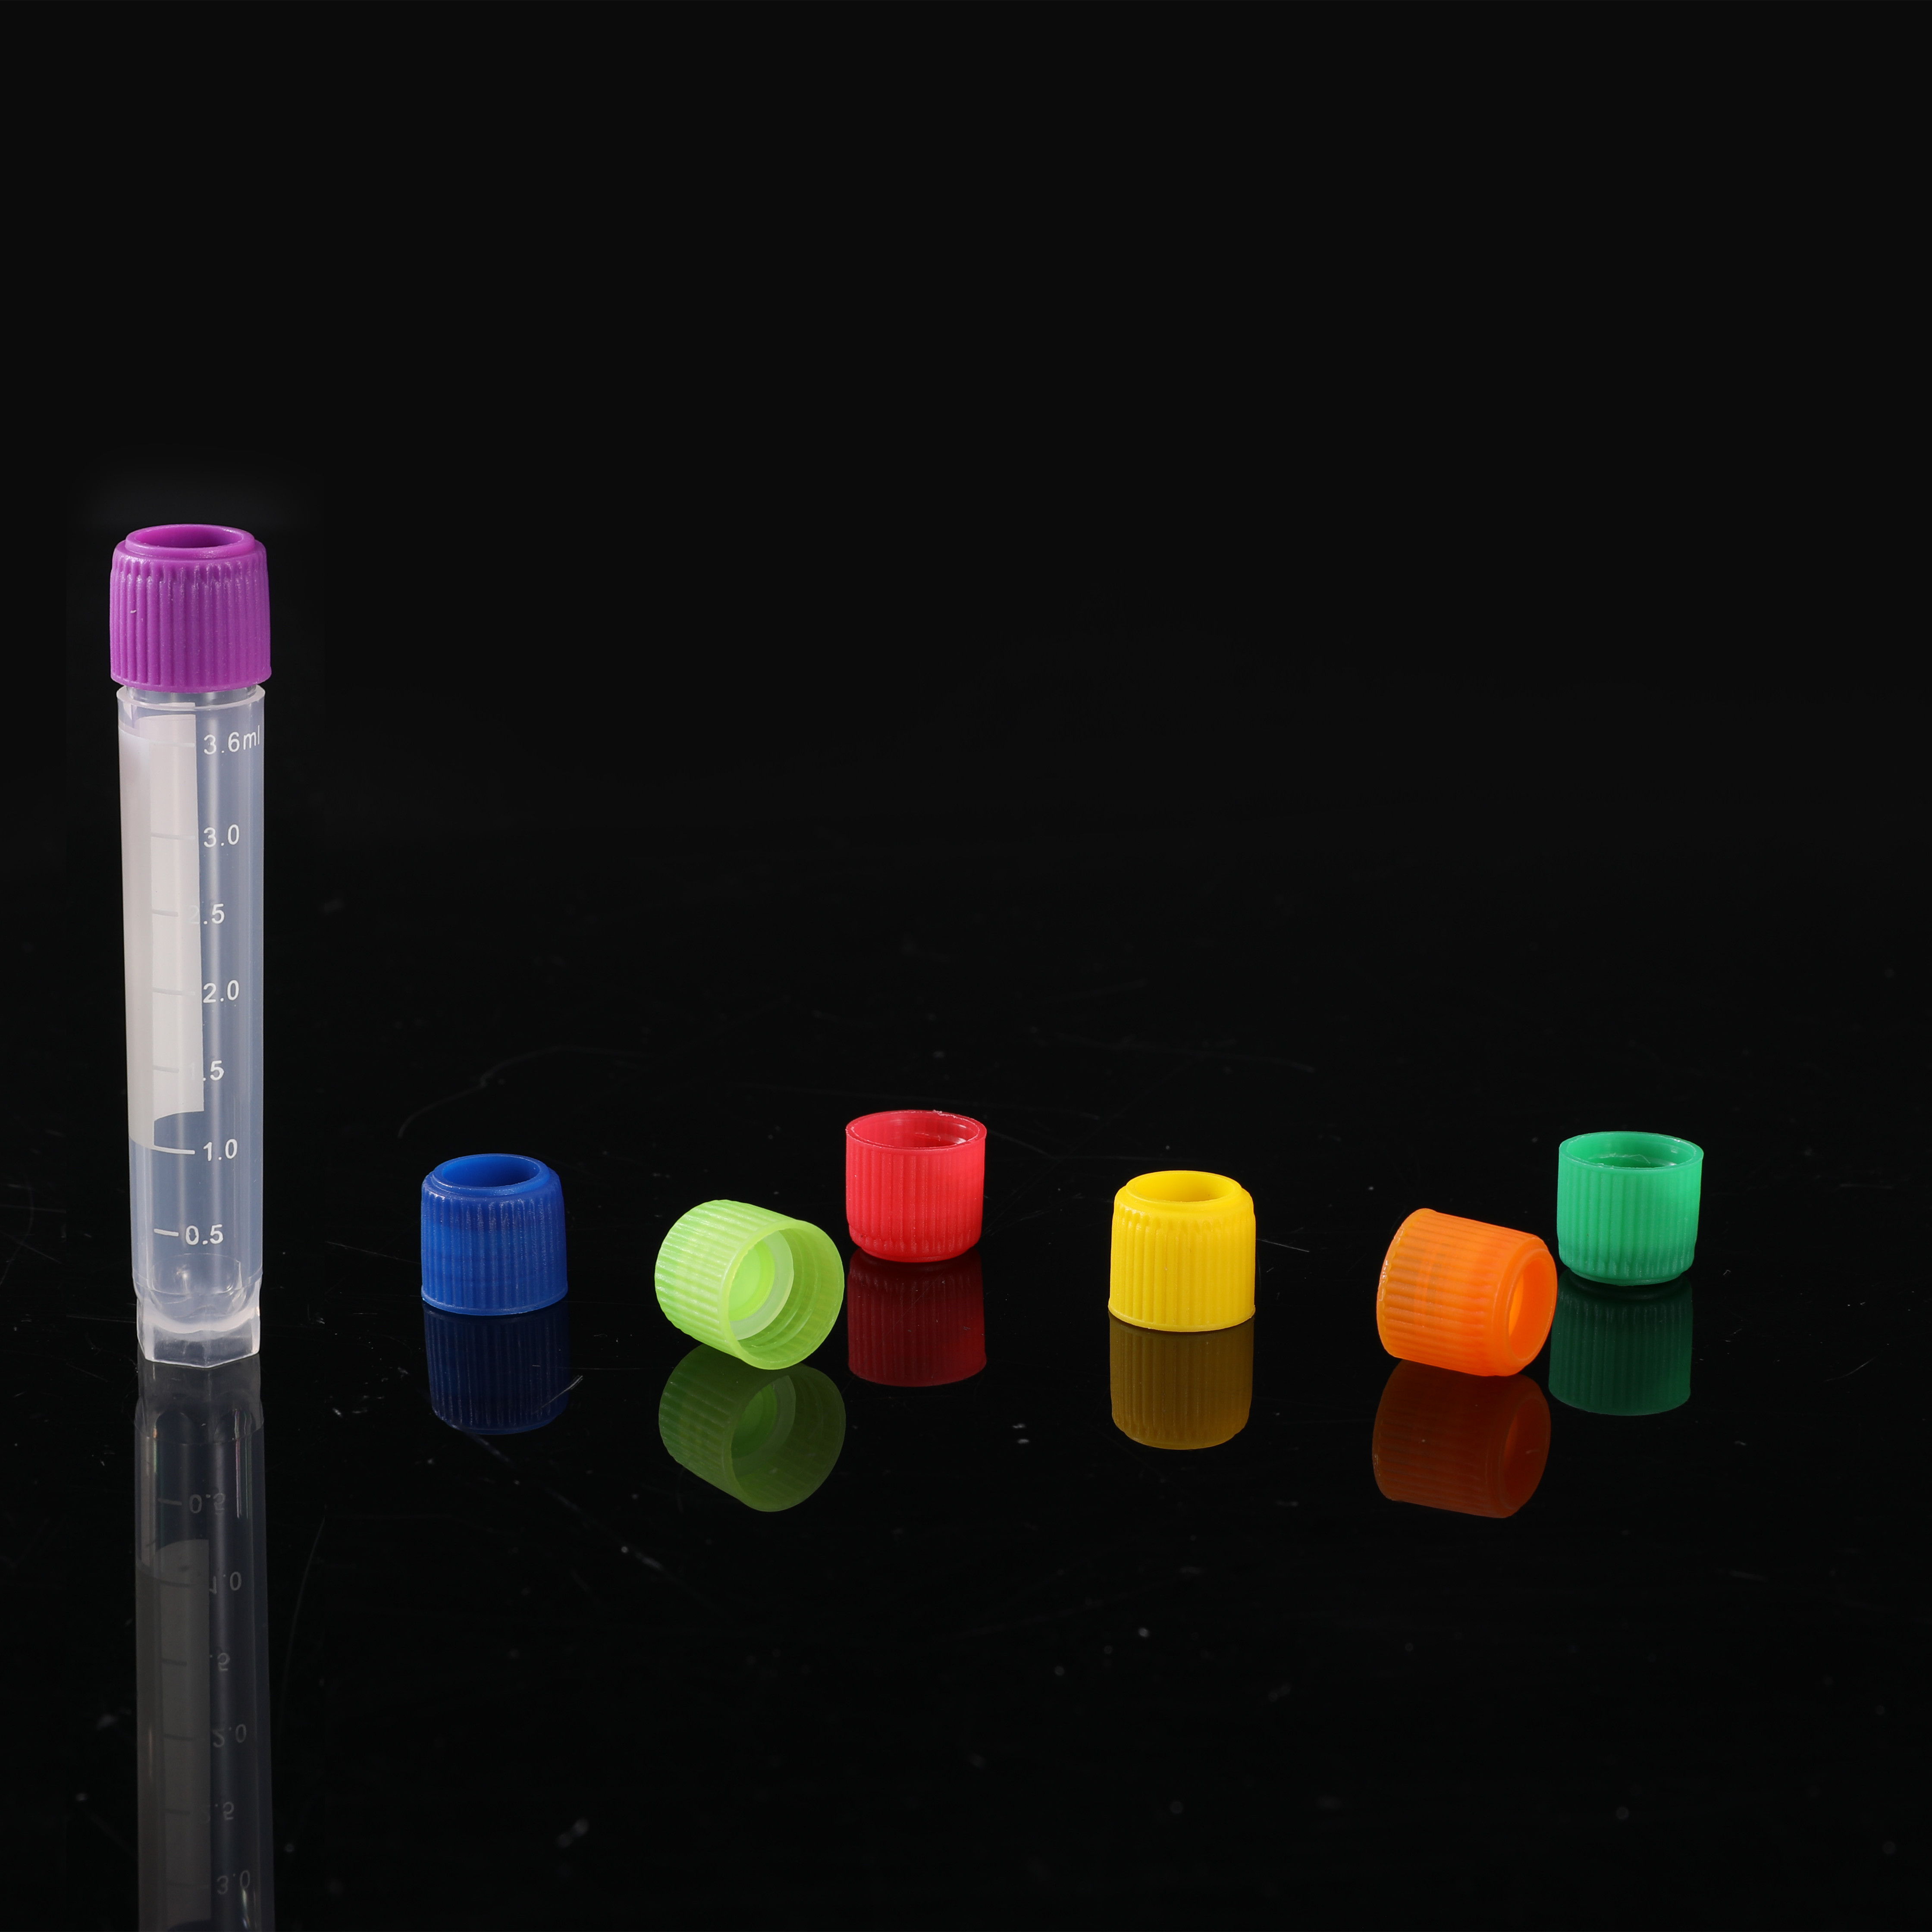 cryo vials, daskarewa tube, waje threaded, 1ml/2ml/3ml/4ml/5ml